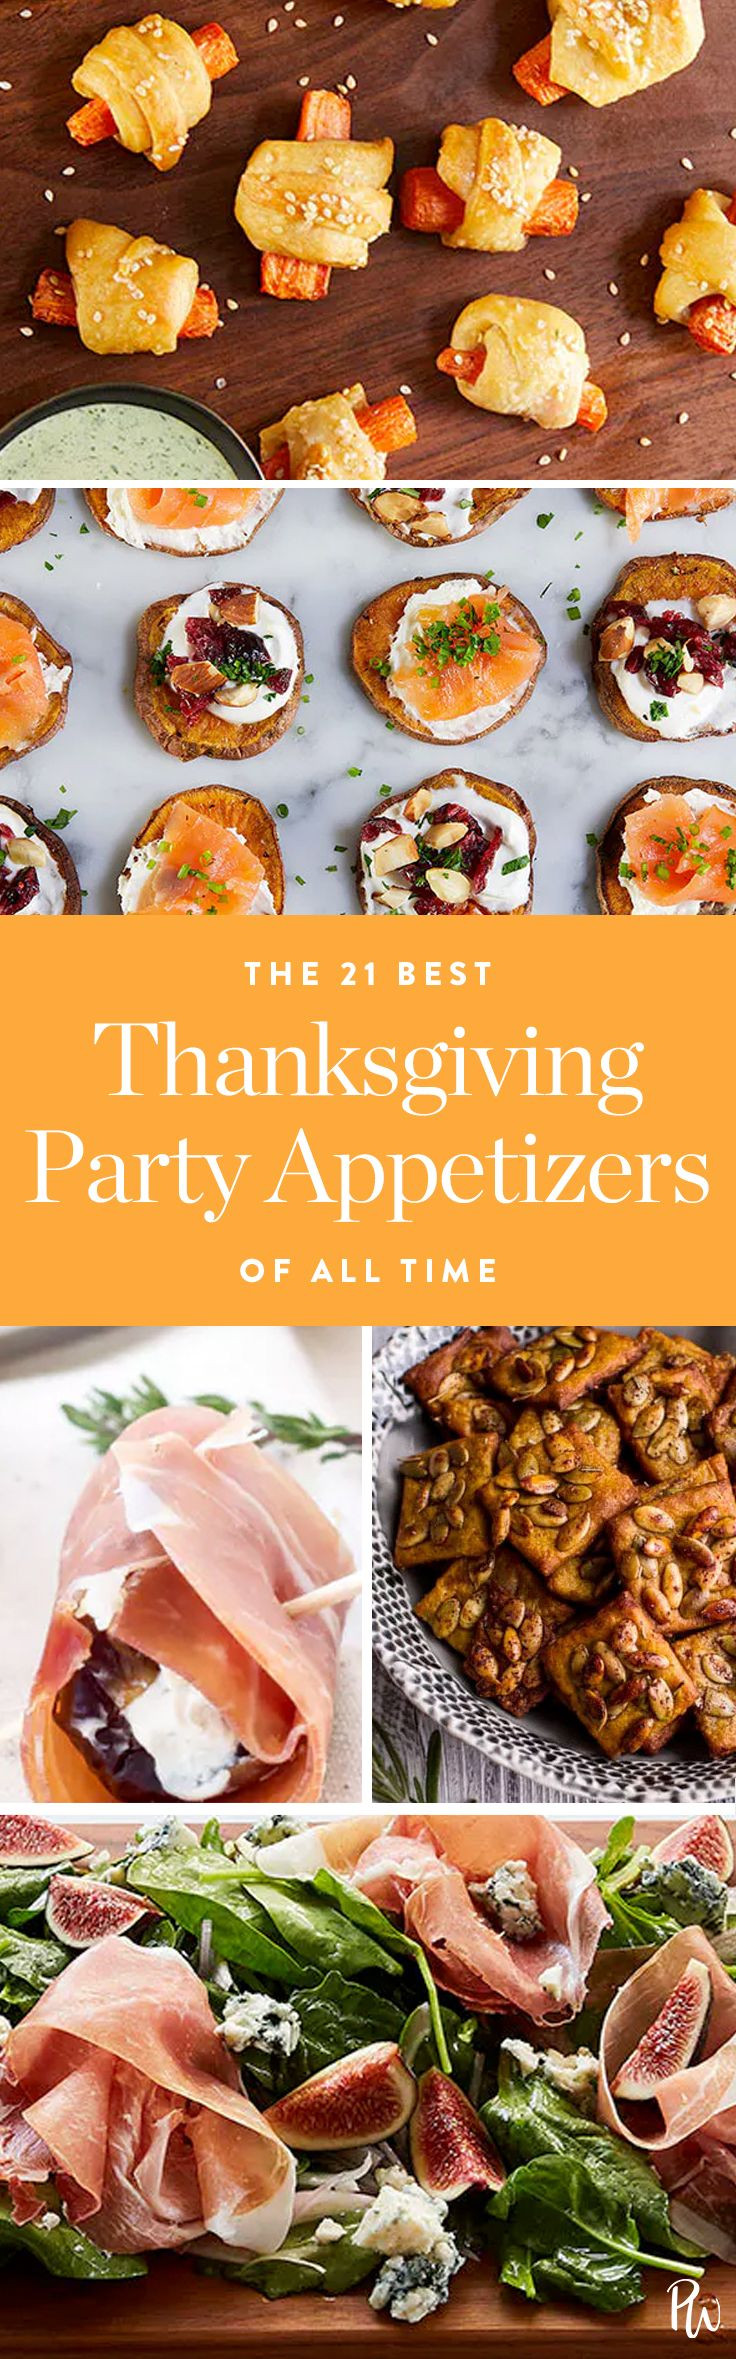 Thanksgiving Appetizers Pinterest
 Best 25 Thanksgiving appetizers ideas on Pinterest